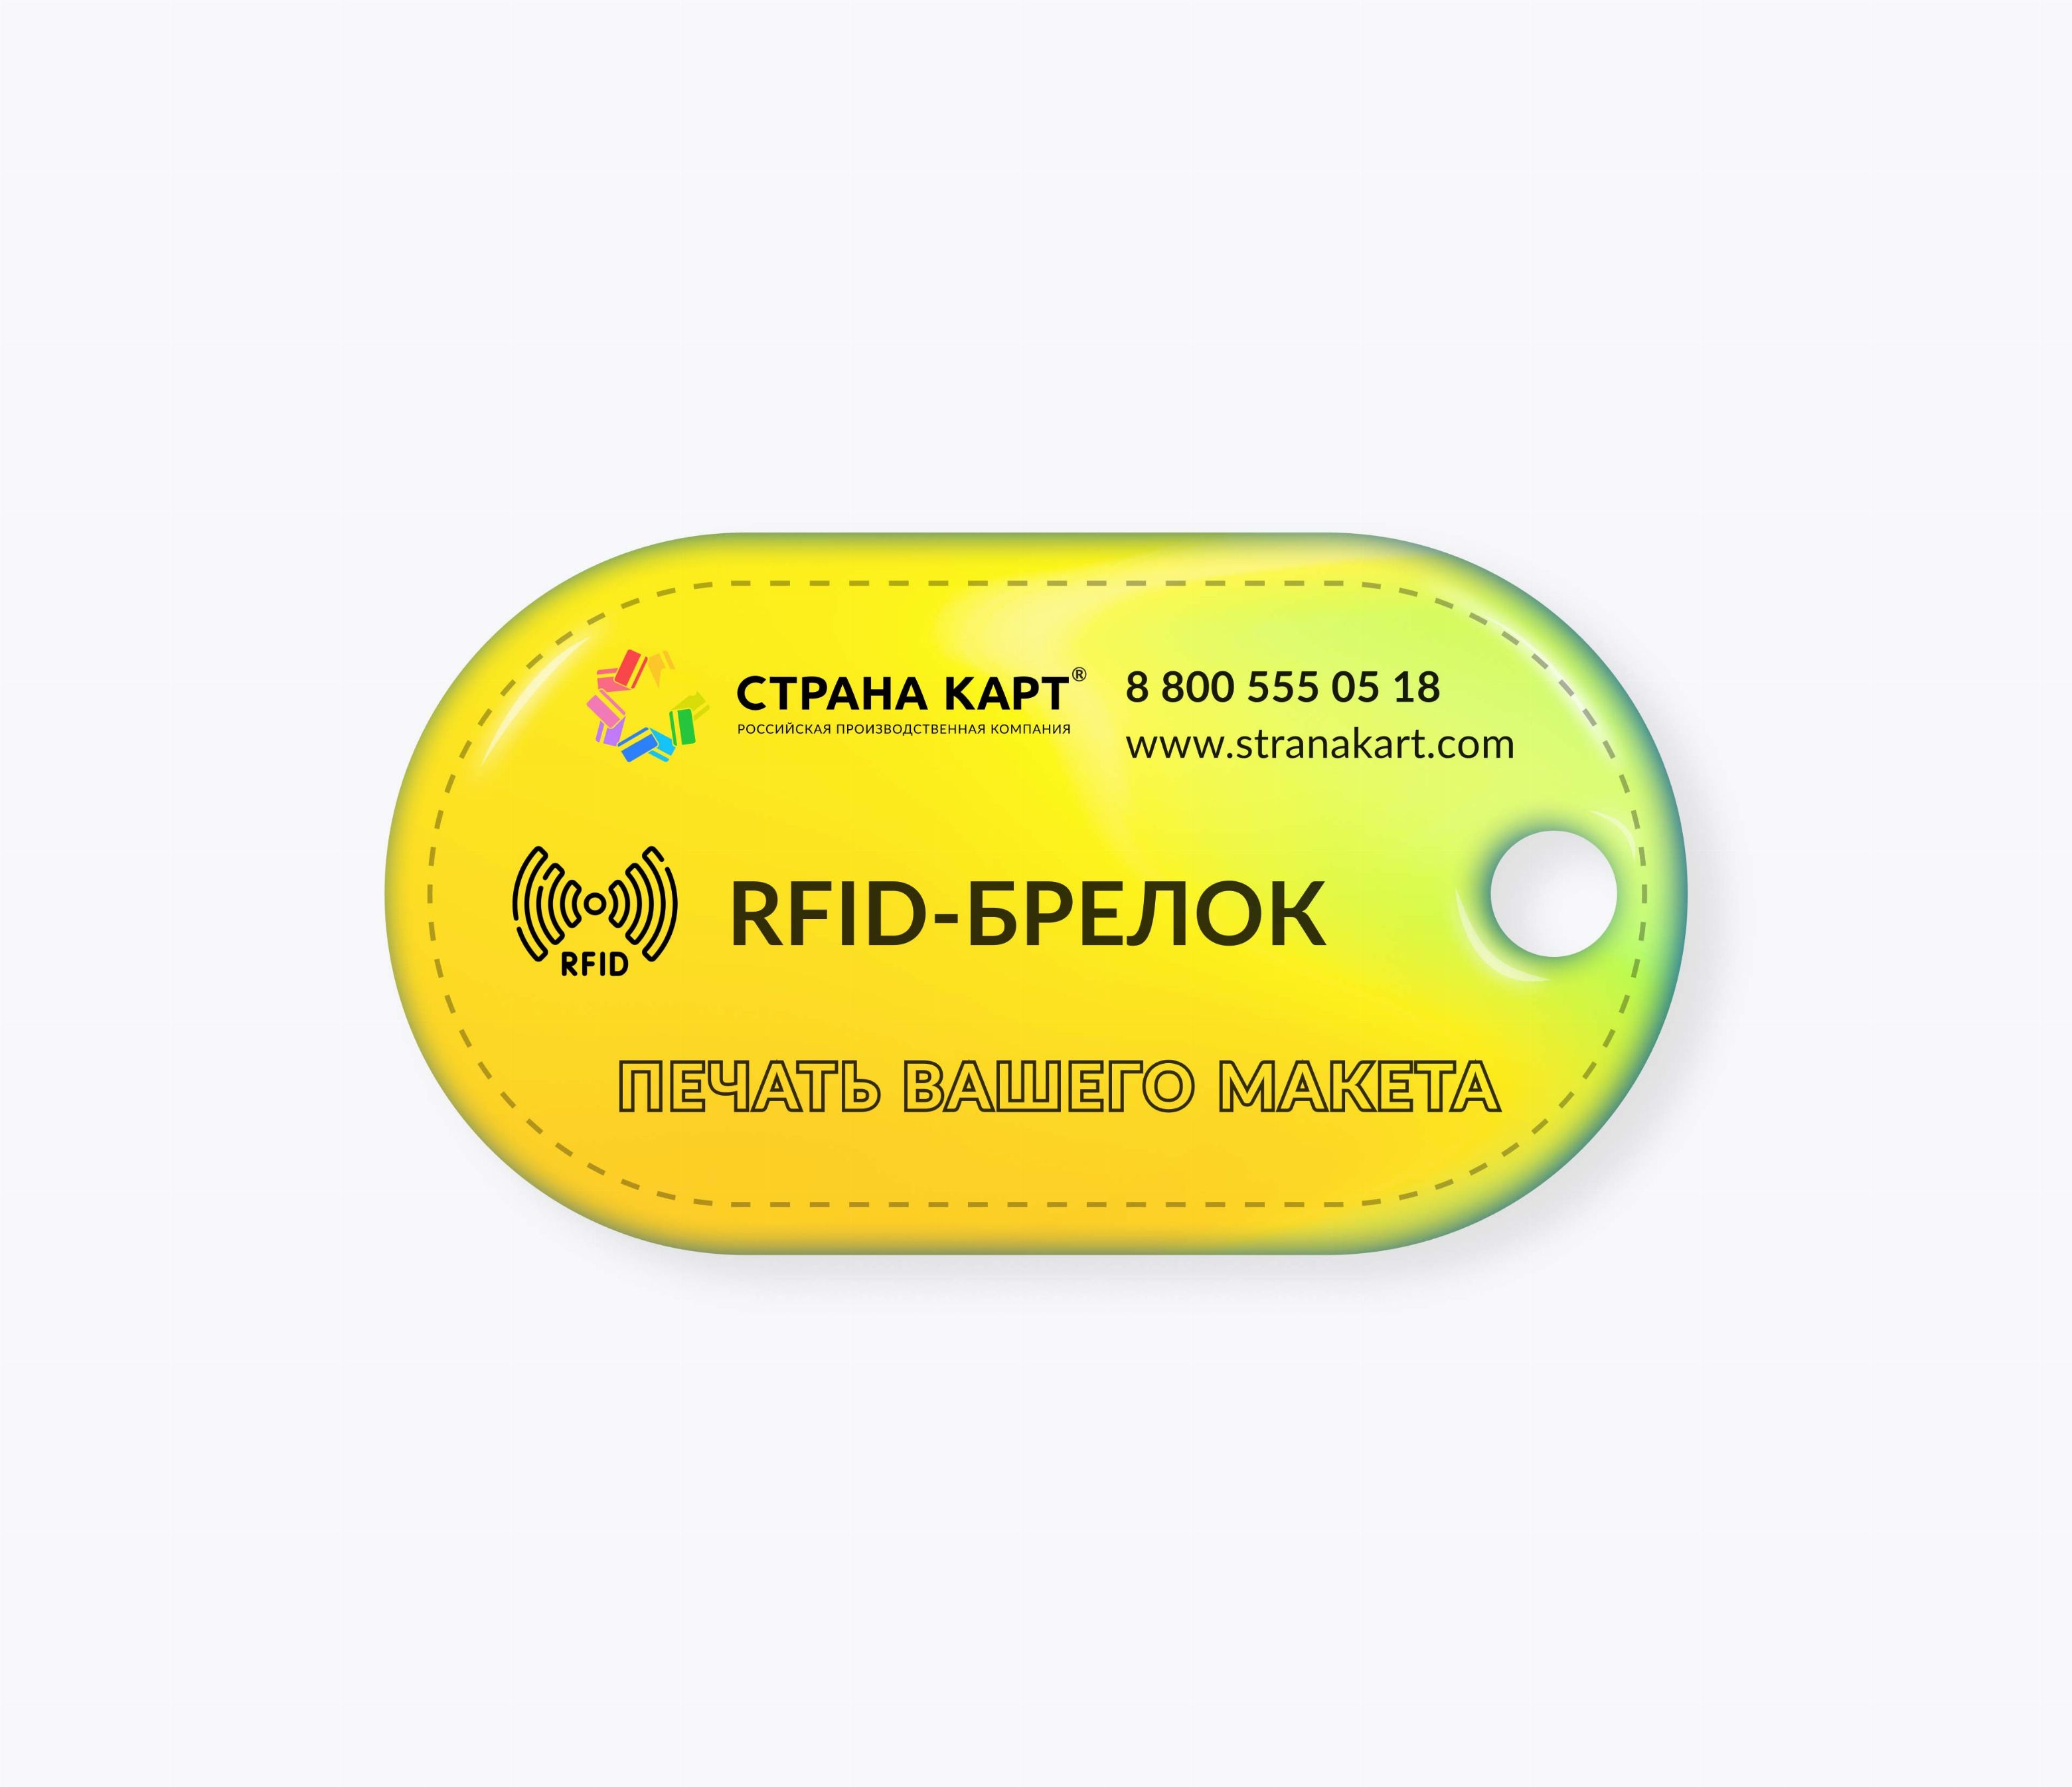 Овальные RFID-брелоки NEOKEY® с чипом SMARTTAG® 4k 4 byte nUID RFID-брелоки NEOKEY® с чипом SMARTTAG® 4k 4 byte nUID и вашим логотипом